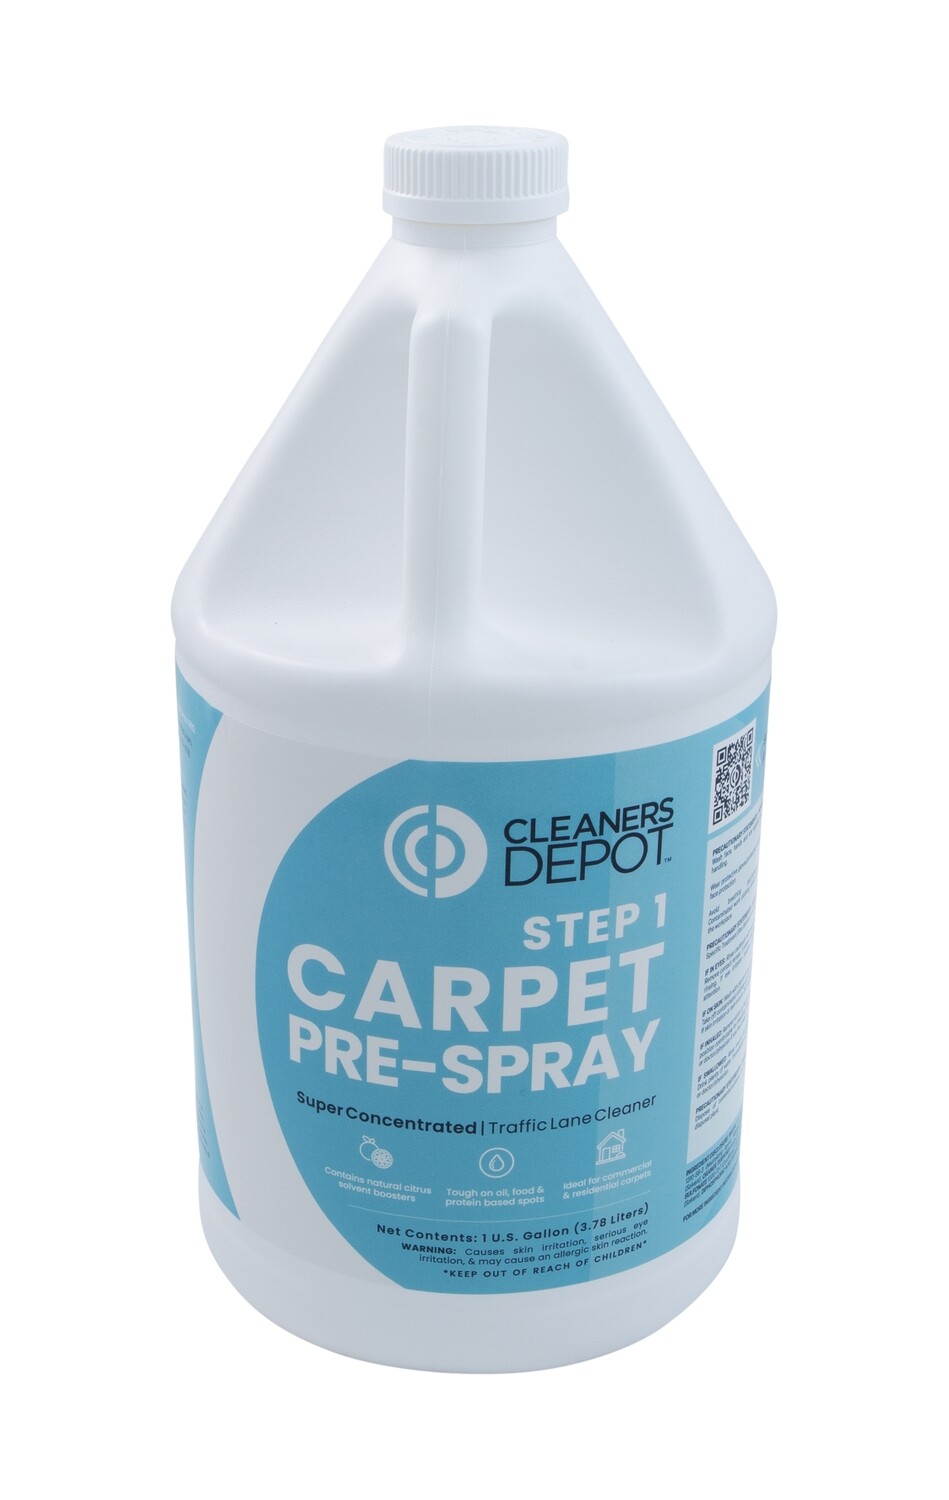 Step 1 Carpet Pre-Spray by Cleaners Depot